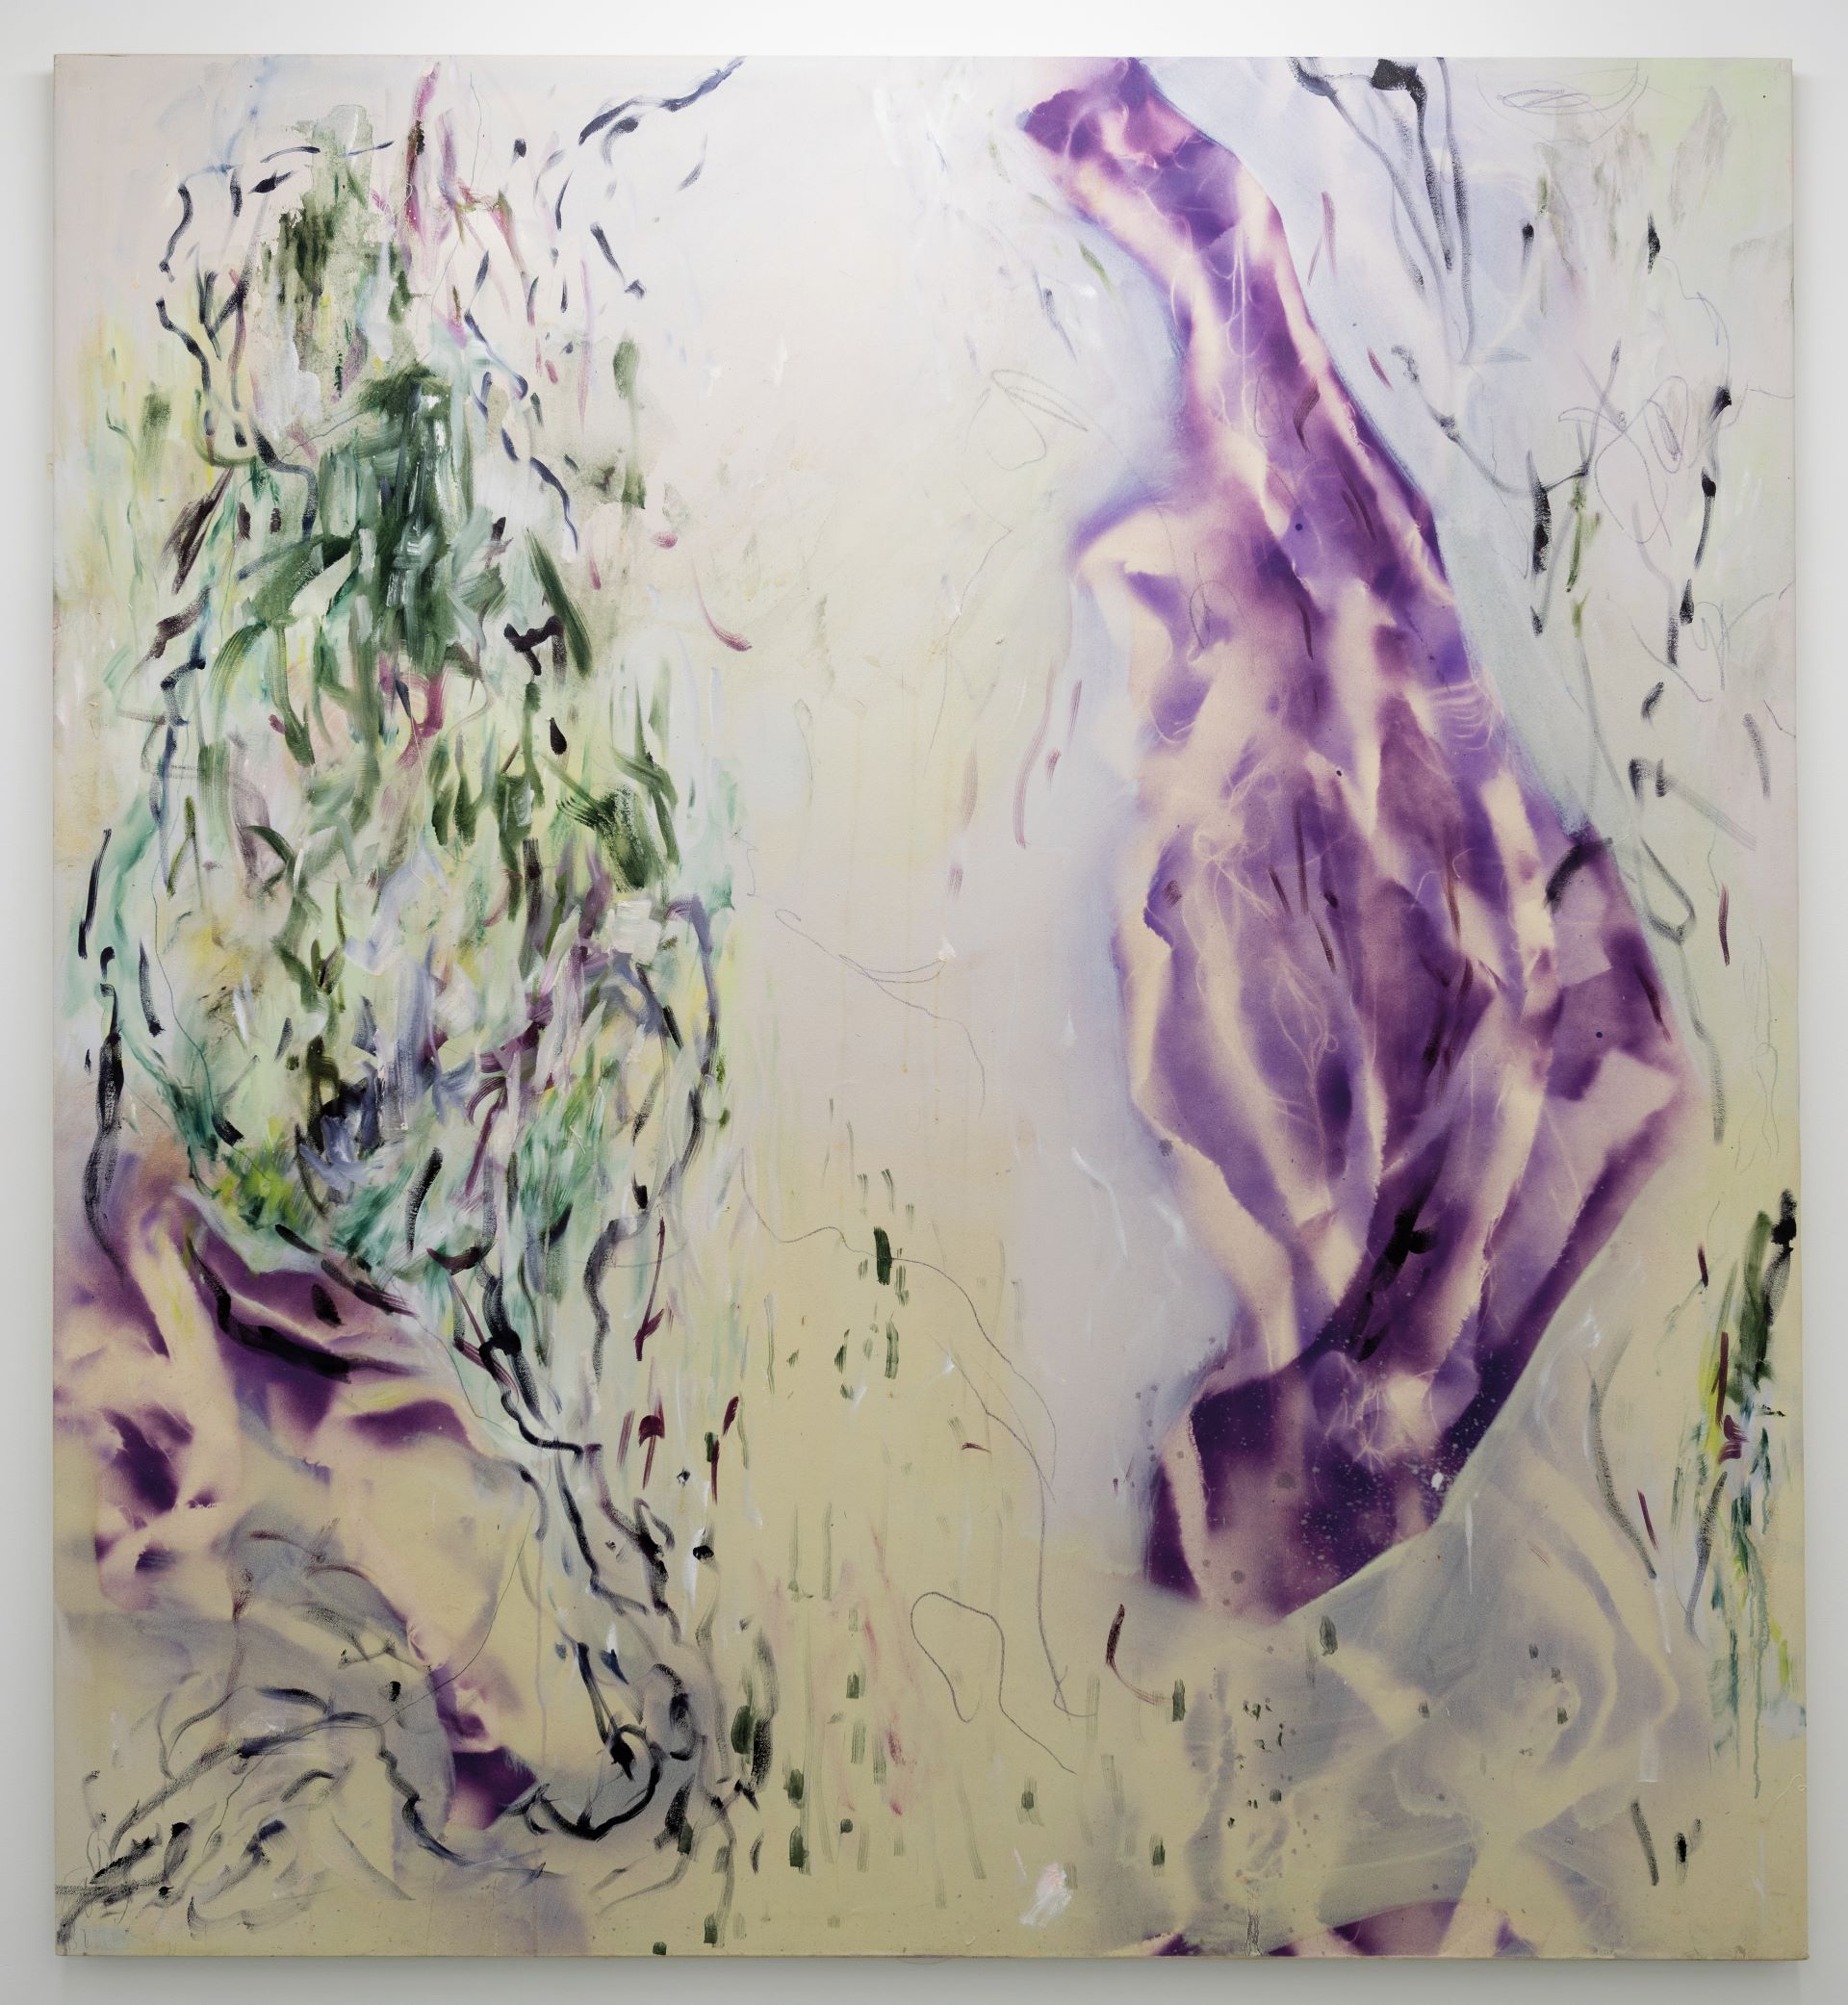 4413Helen Teede. Between Two Fires. 2018. Oil and spray-paint on canvas. 185 x 170 cm. On loan from David Altman Collection. Photo: Johann Laurens. Â©  Zeitz  MOCAA